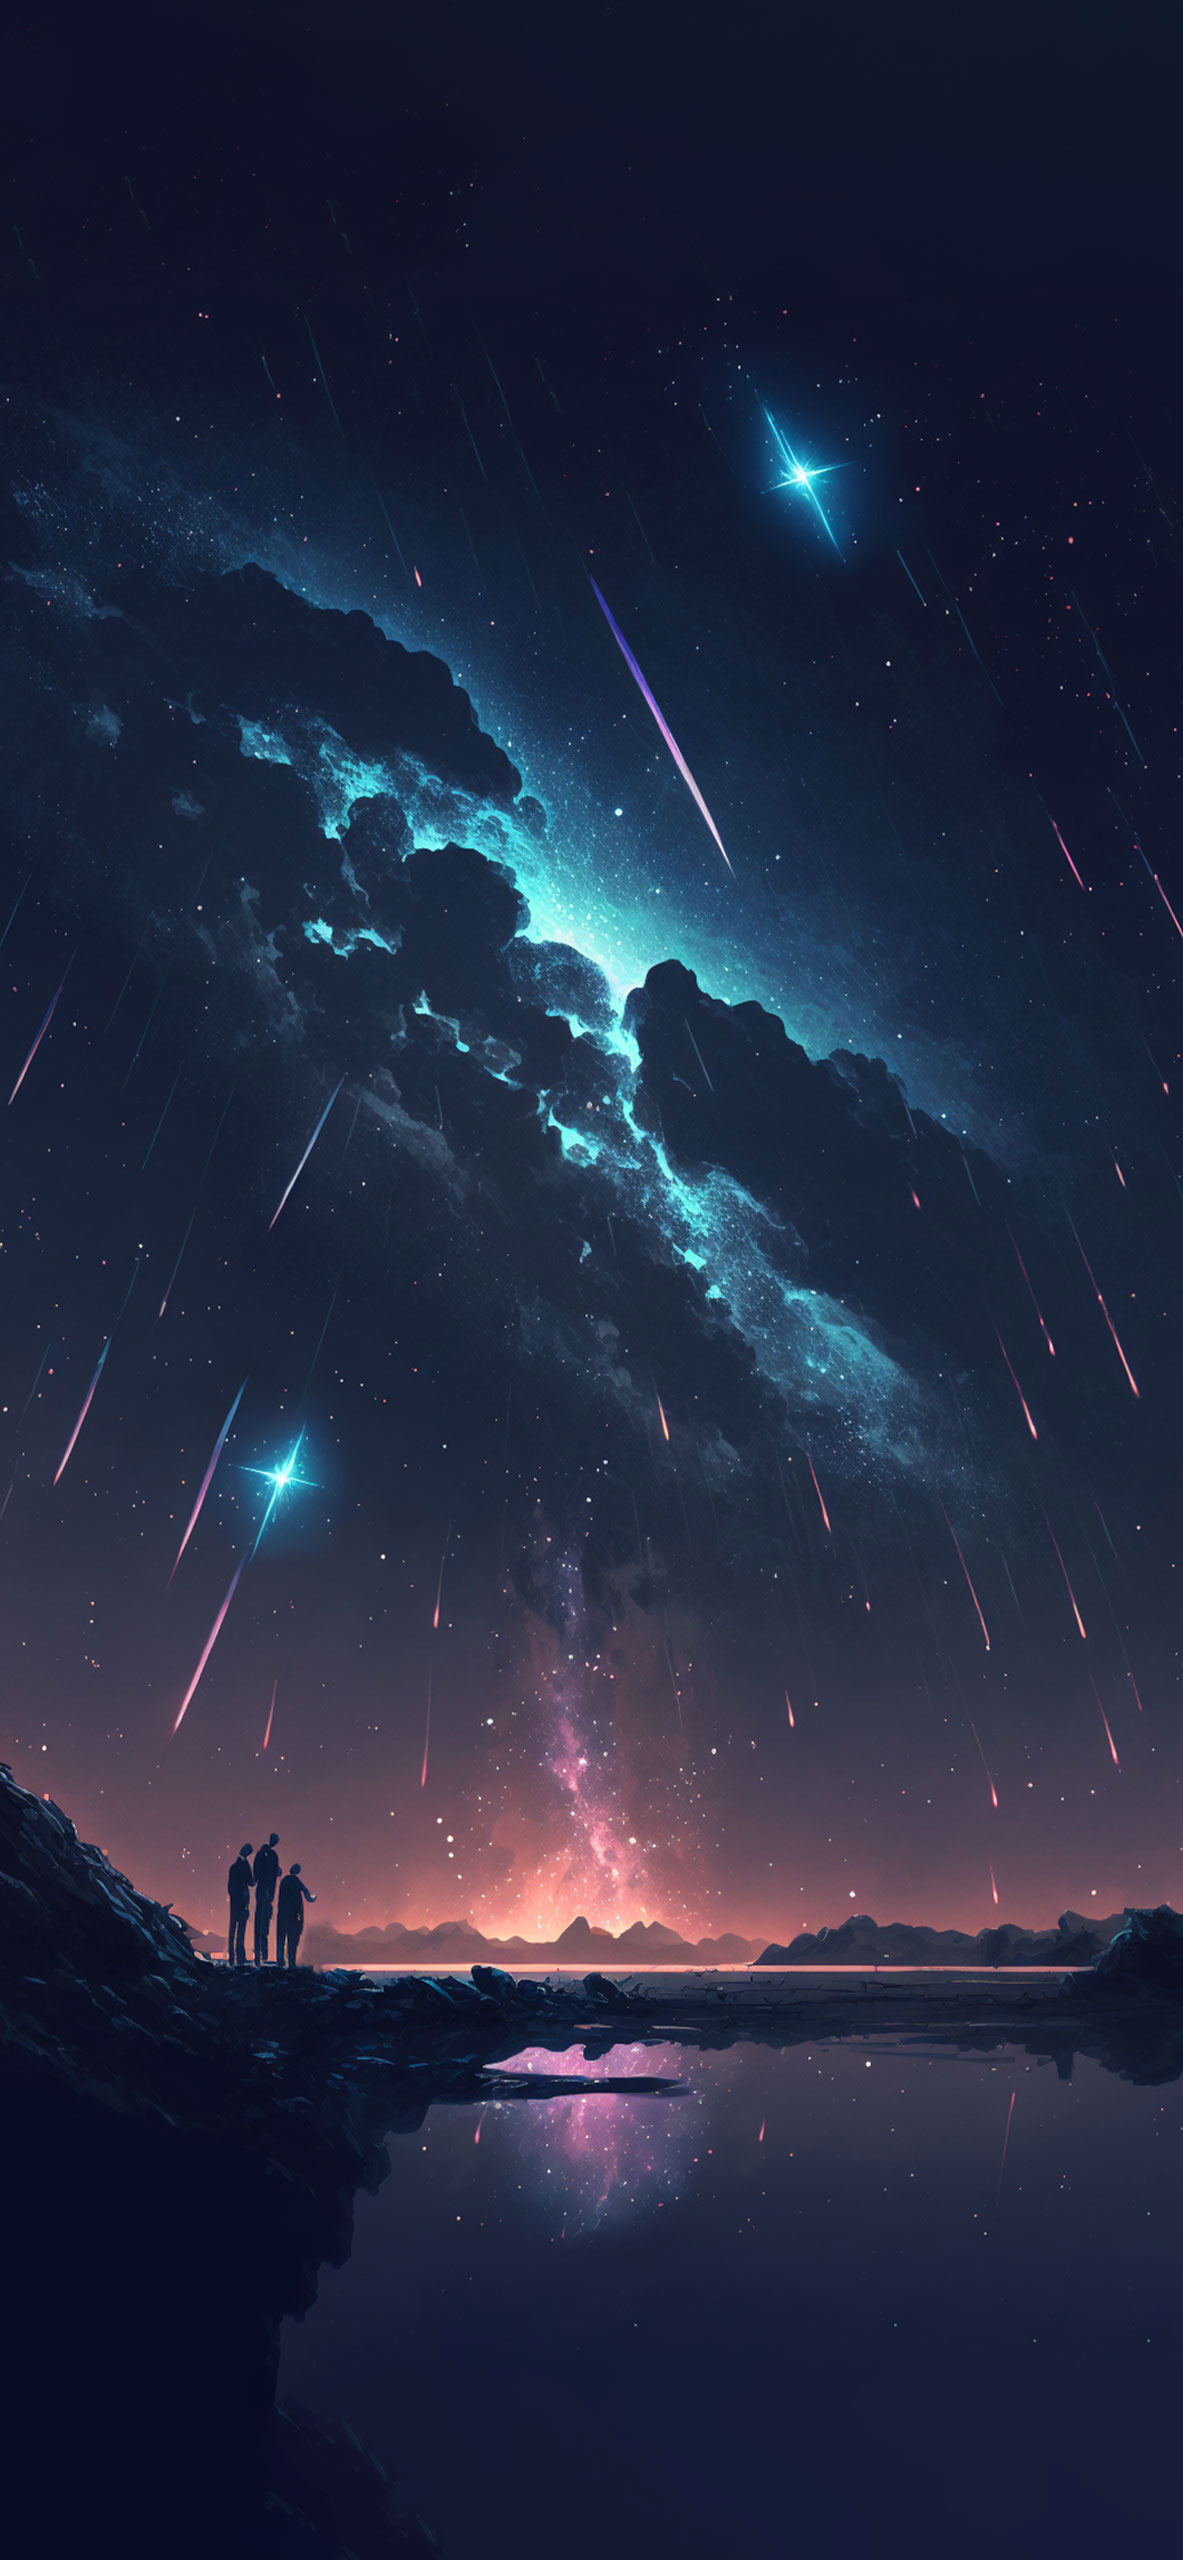 starfalls in the night sky wallpaper